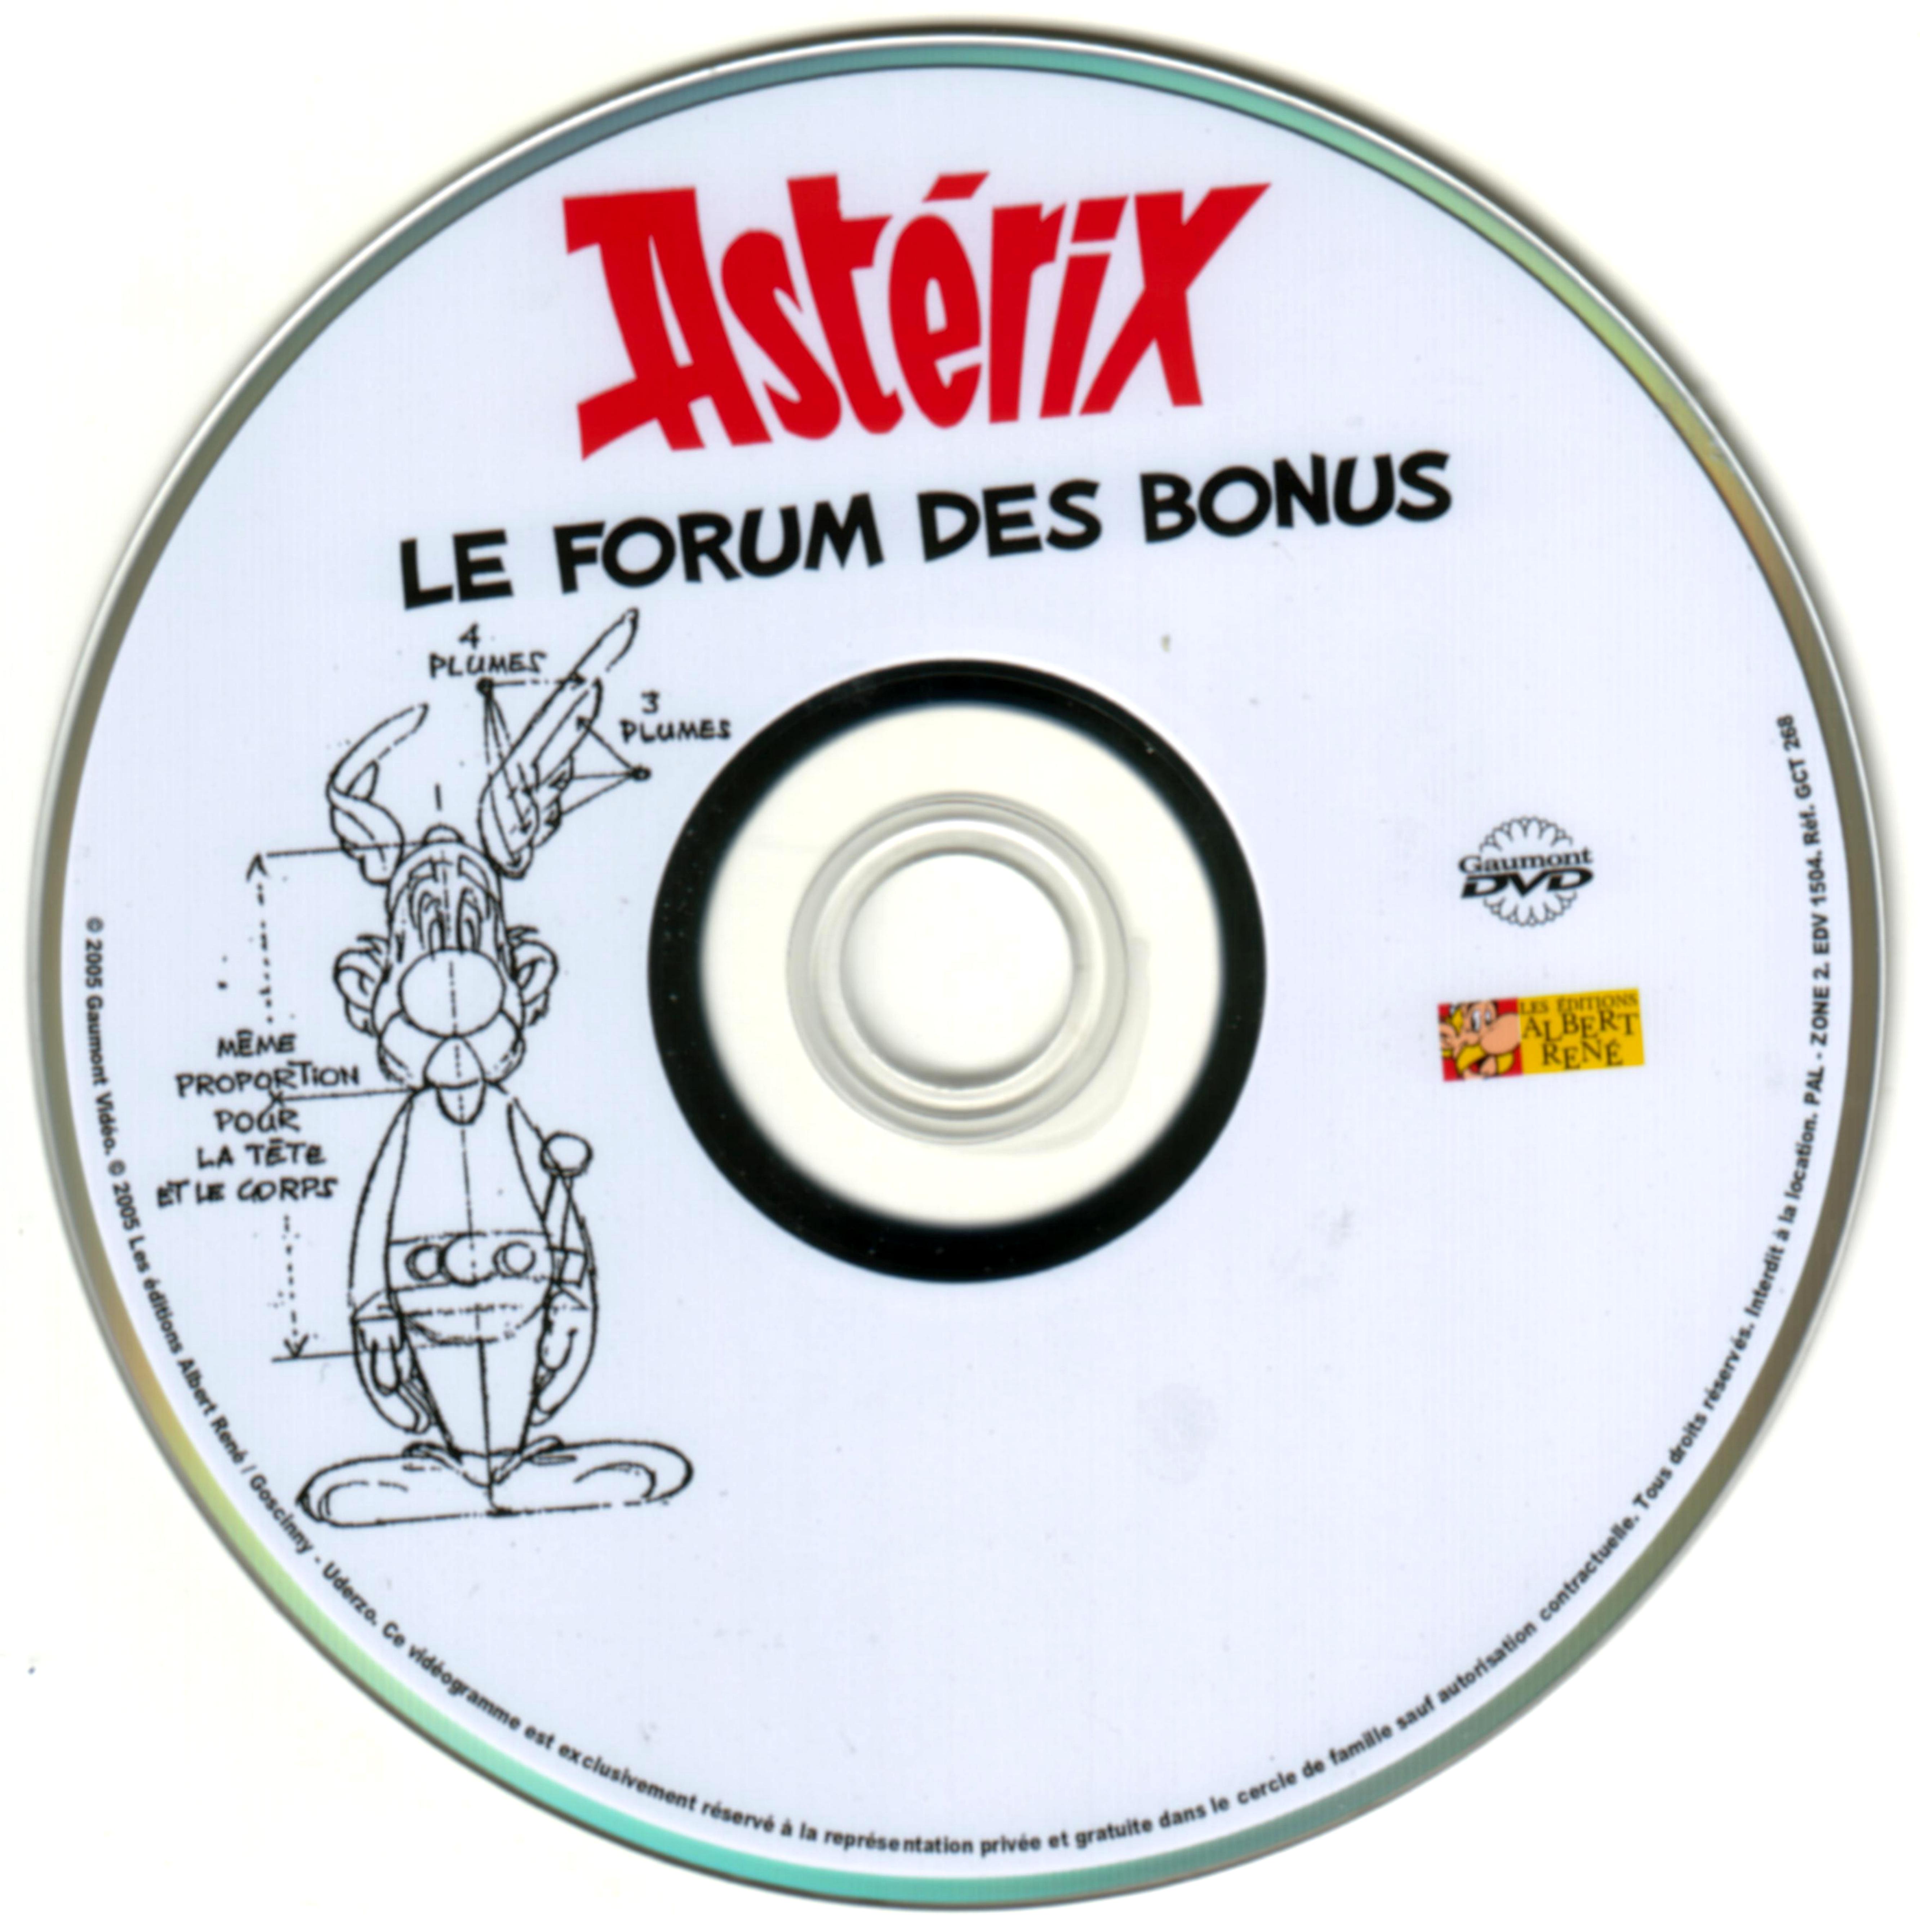 Asterix - Le forum des bonus